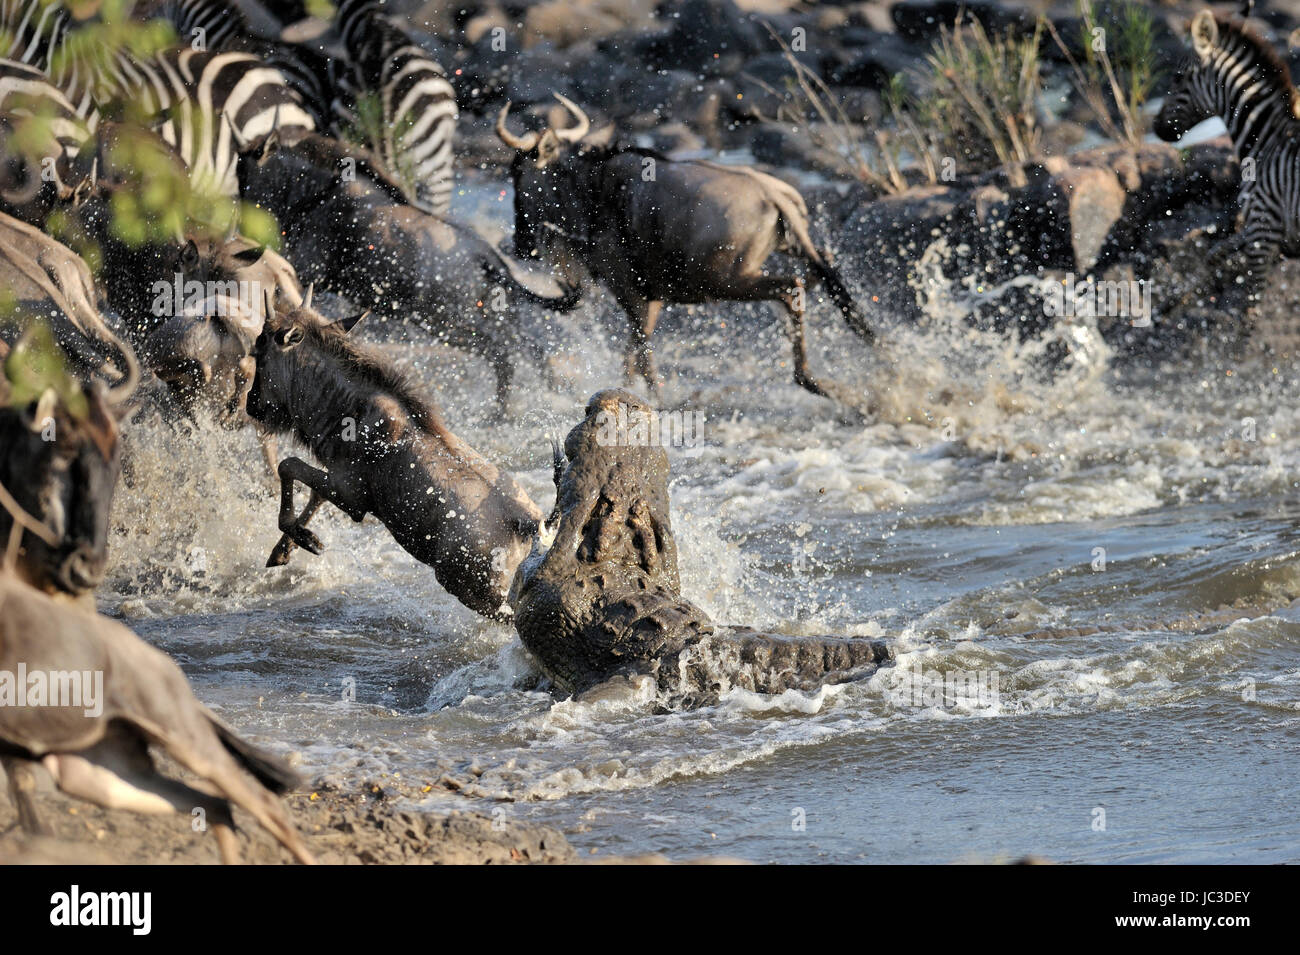 Wildebeest (Connochaetes taurinus) attacked by Crocodile (Crocodylus niloticus) in Grumeti river, Serengeti national park, Tanzania Stock Photo